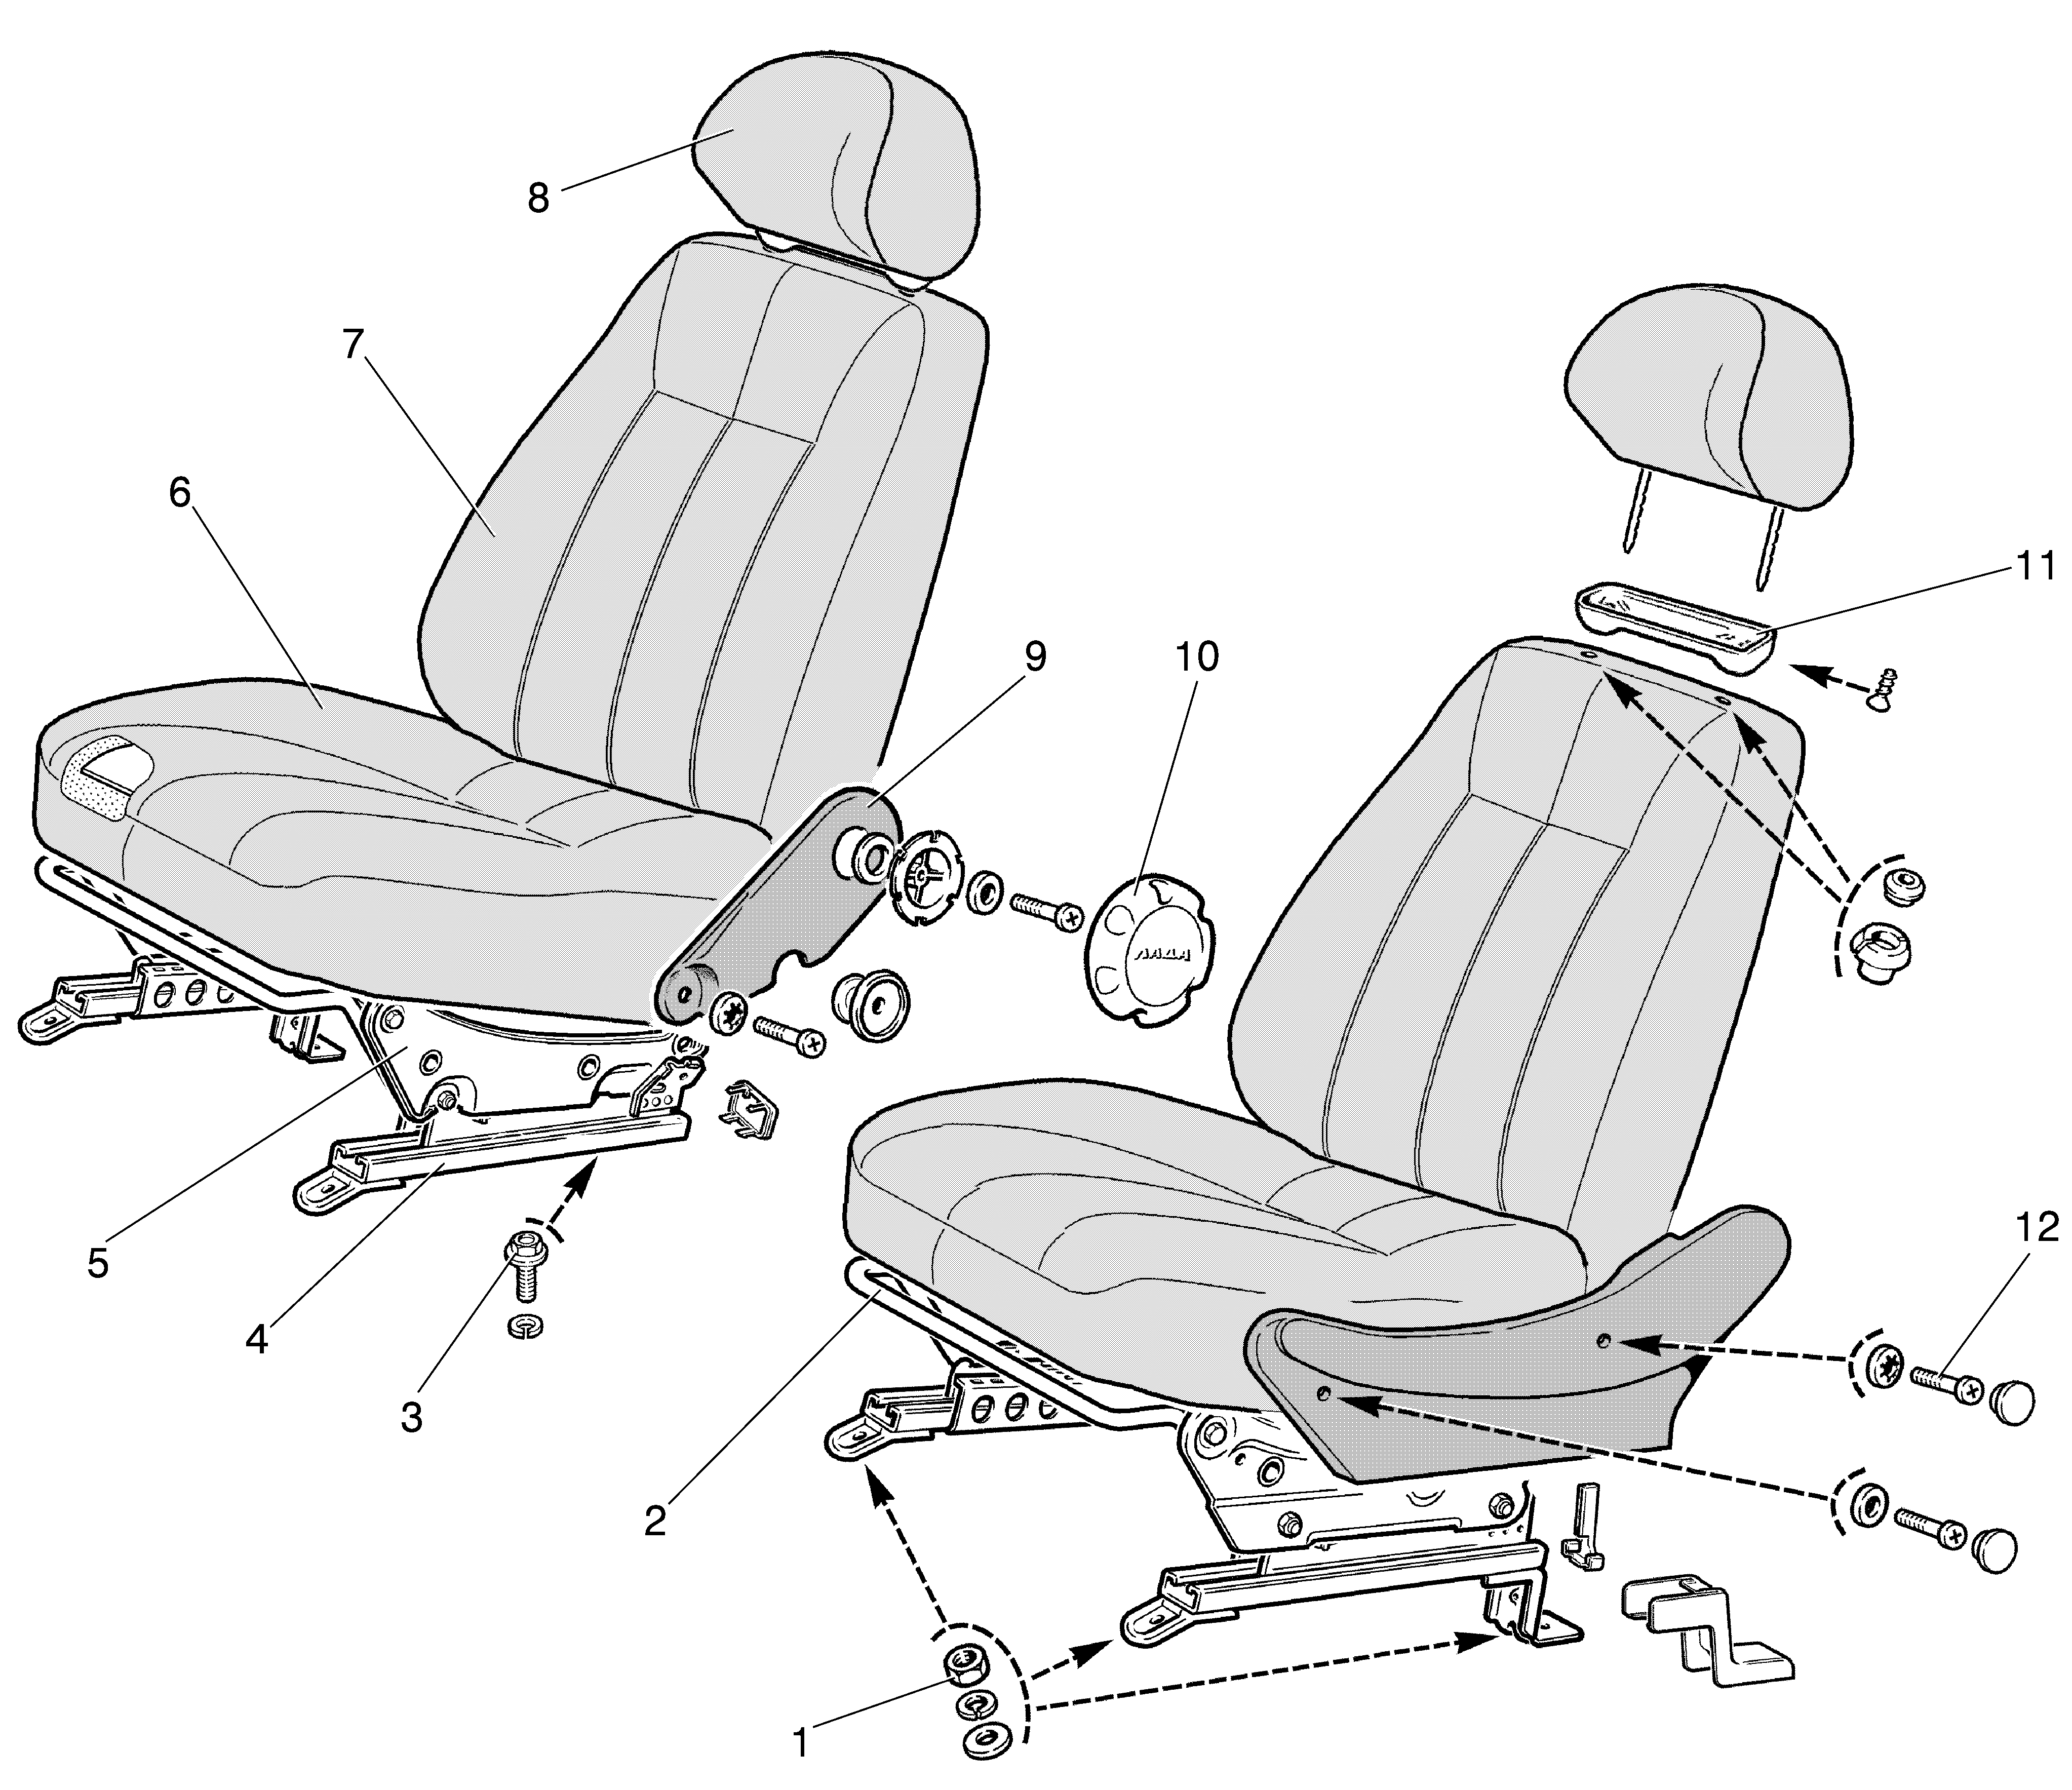 Ремонт спинки компьютерного кресла в домашних условиях